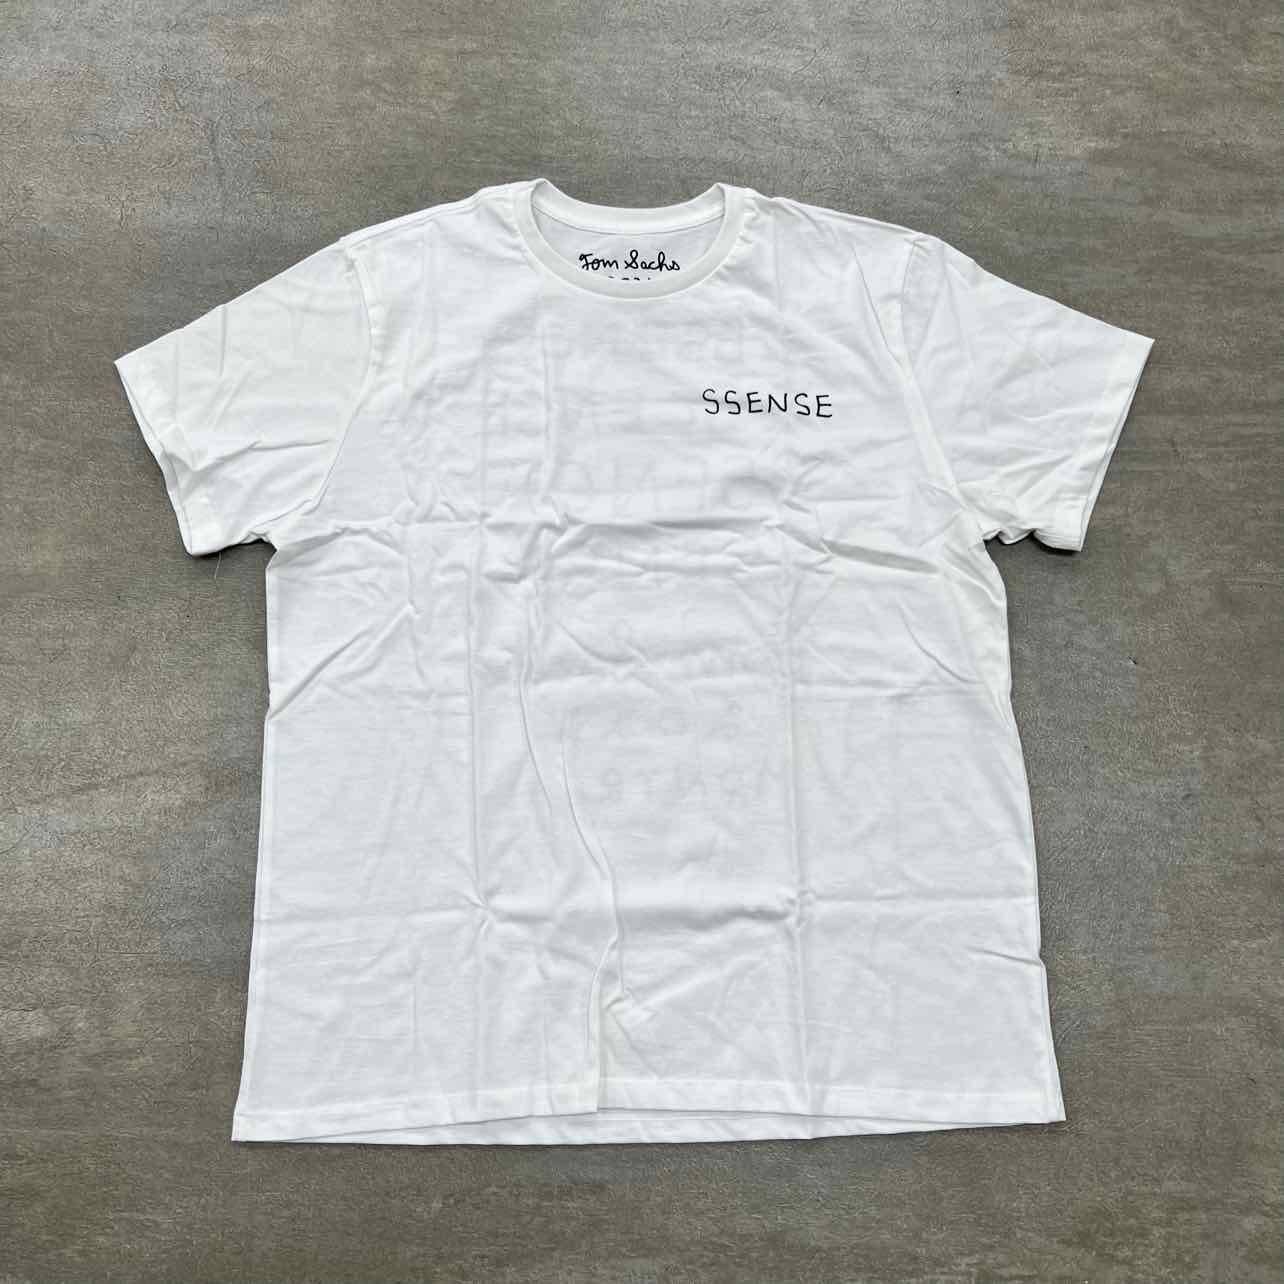 Tom Sachs T-Shirt &quot;SSENSE&quot; White New Size M